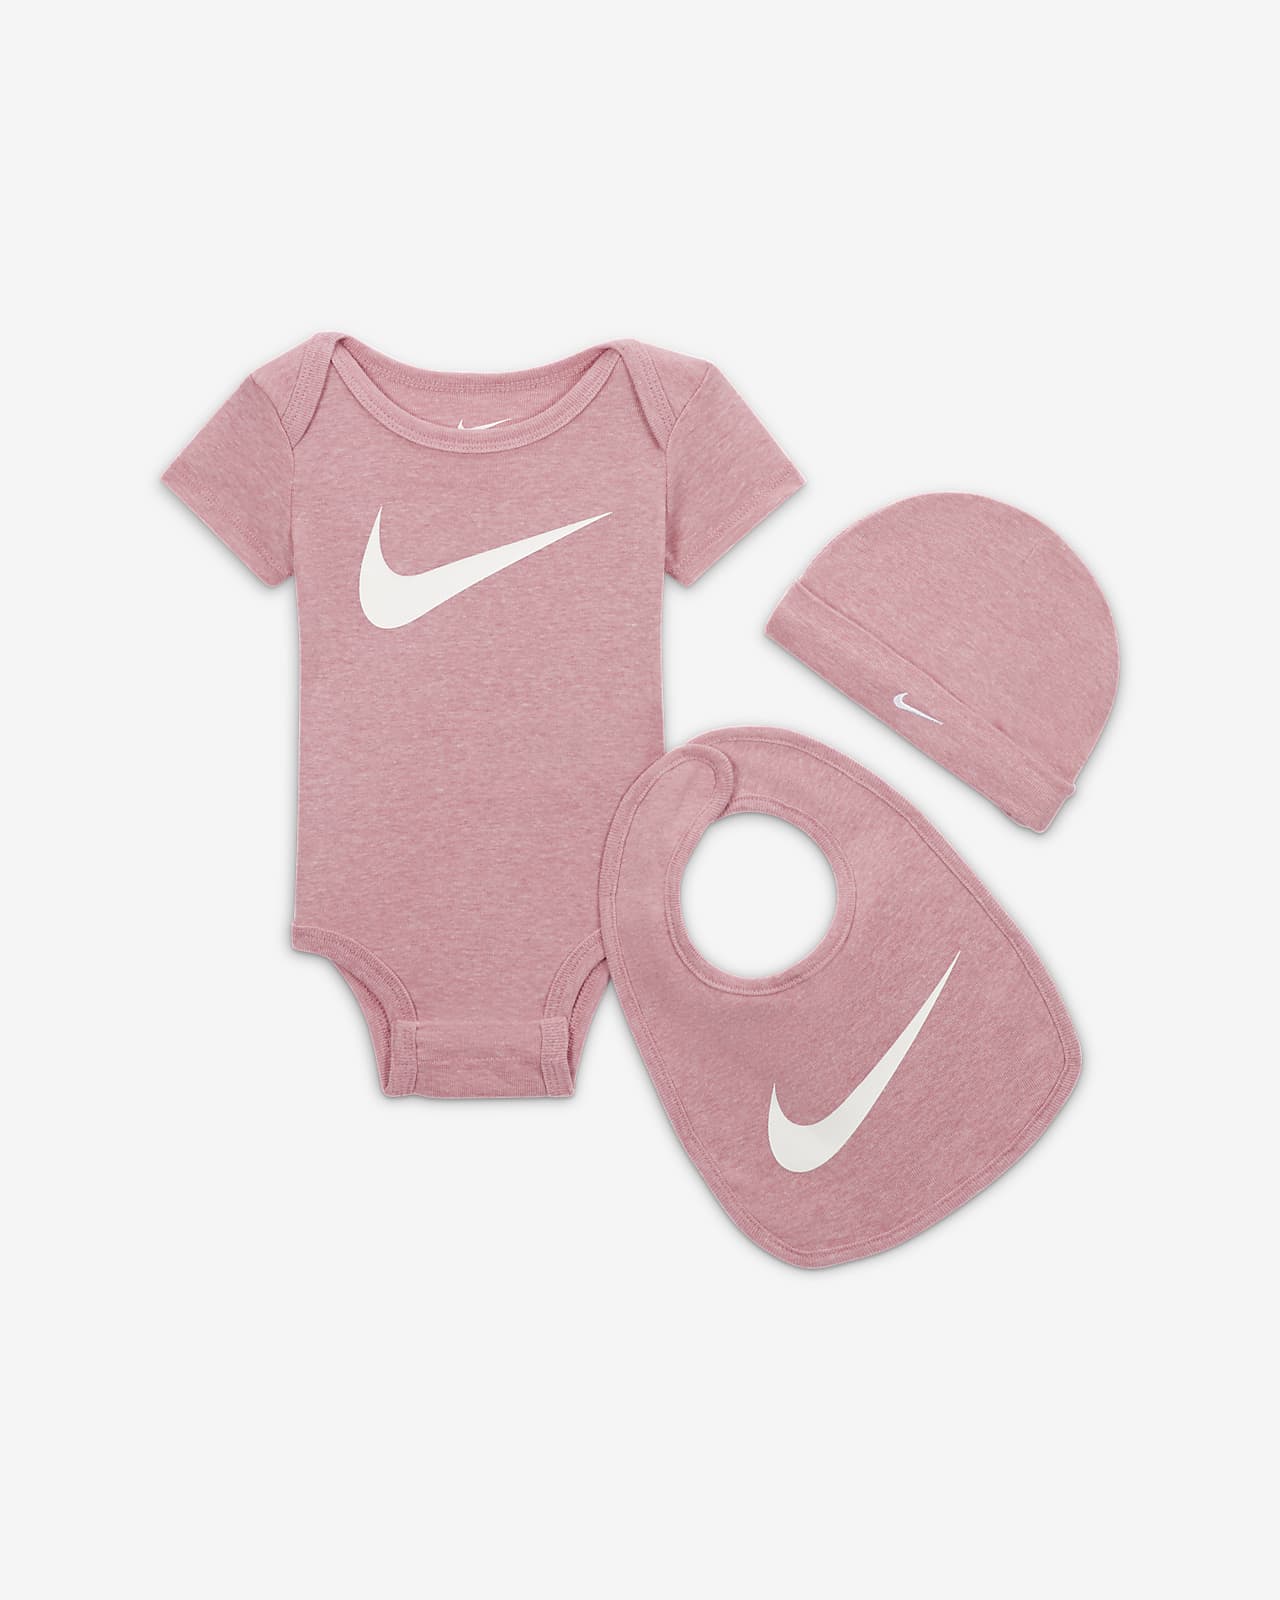 intellectueel Toneelschrijver schot Nike Baby (3-6M) Swoosh Beanie, Bib and Bodysuit Box Set. Nike.com